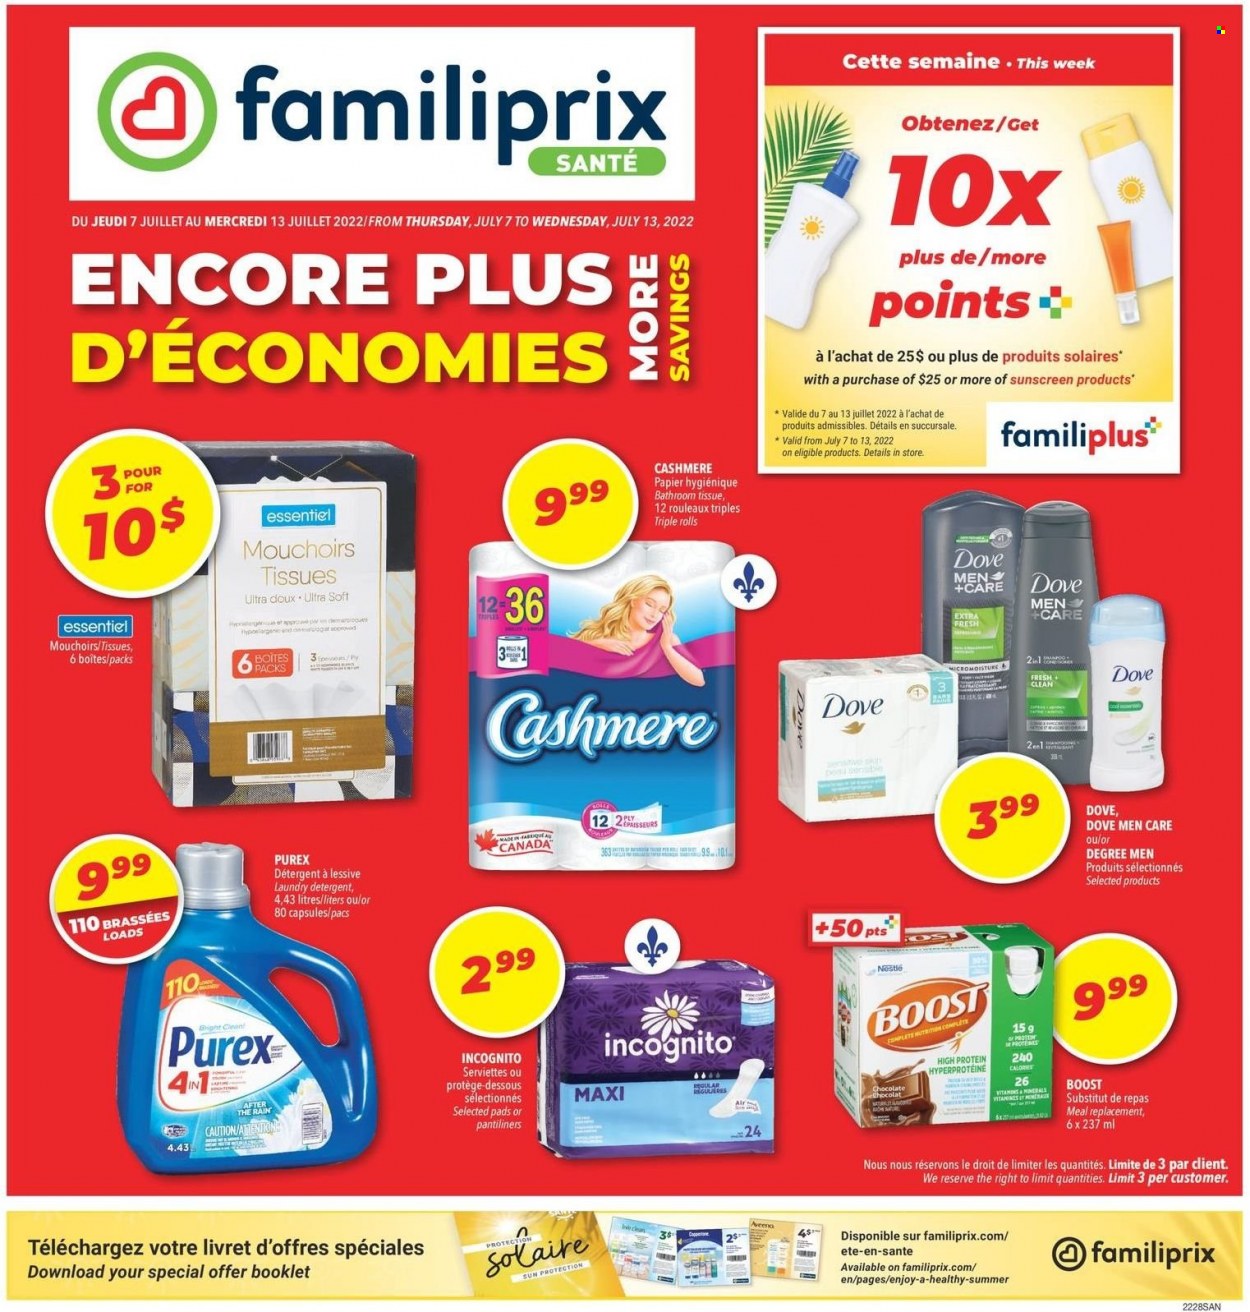 Familiprix Santé flyer  - July 07, 2022 - July 13, 2022.